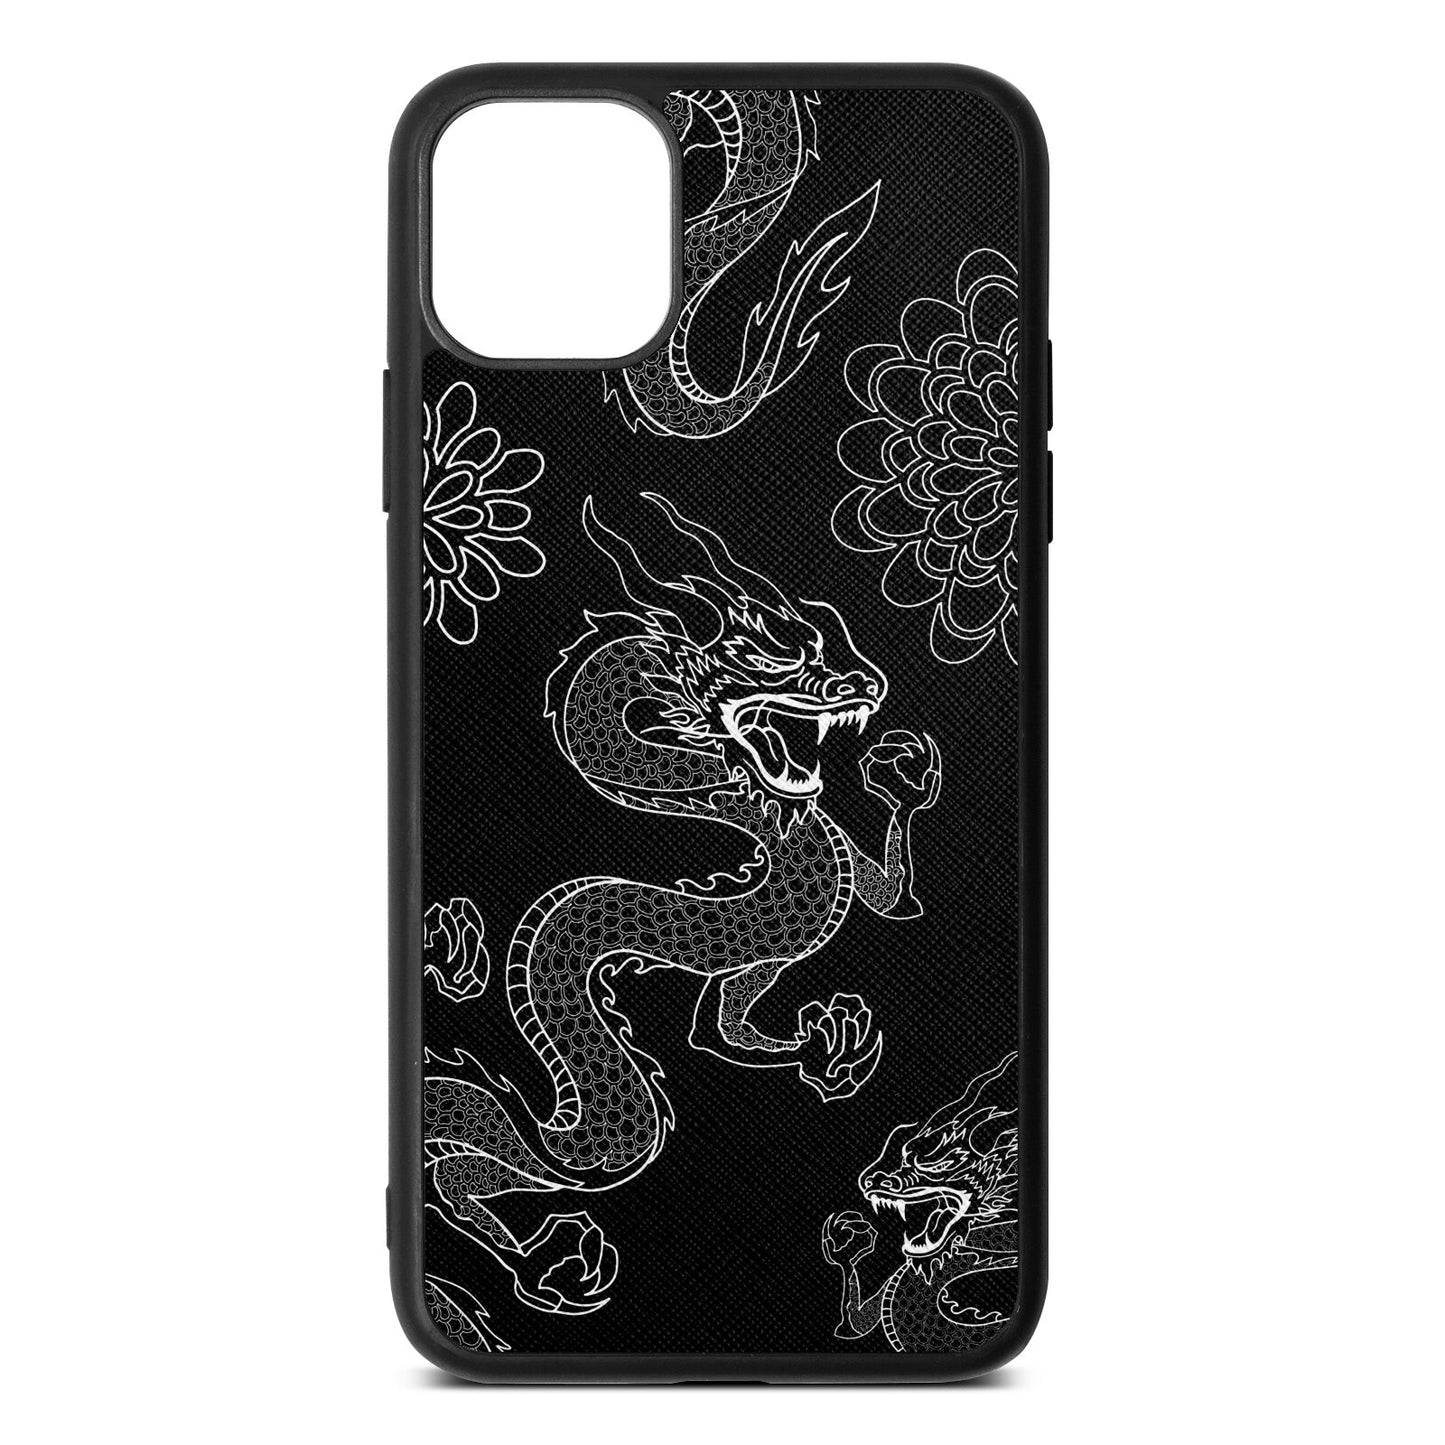 Dragons Black Saffiano Leather iPhone 11 Pro Max Case